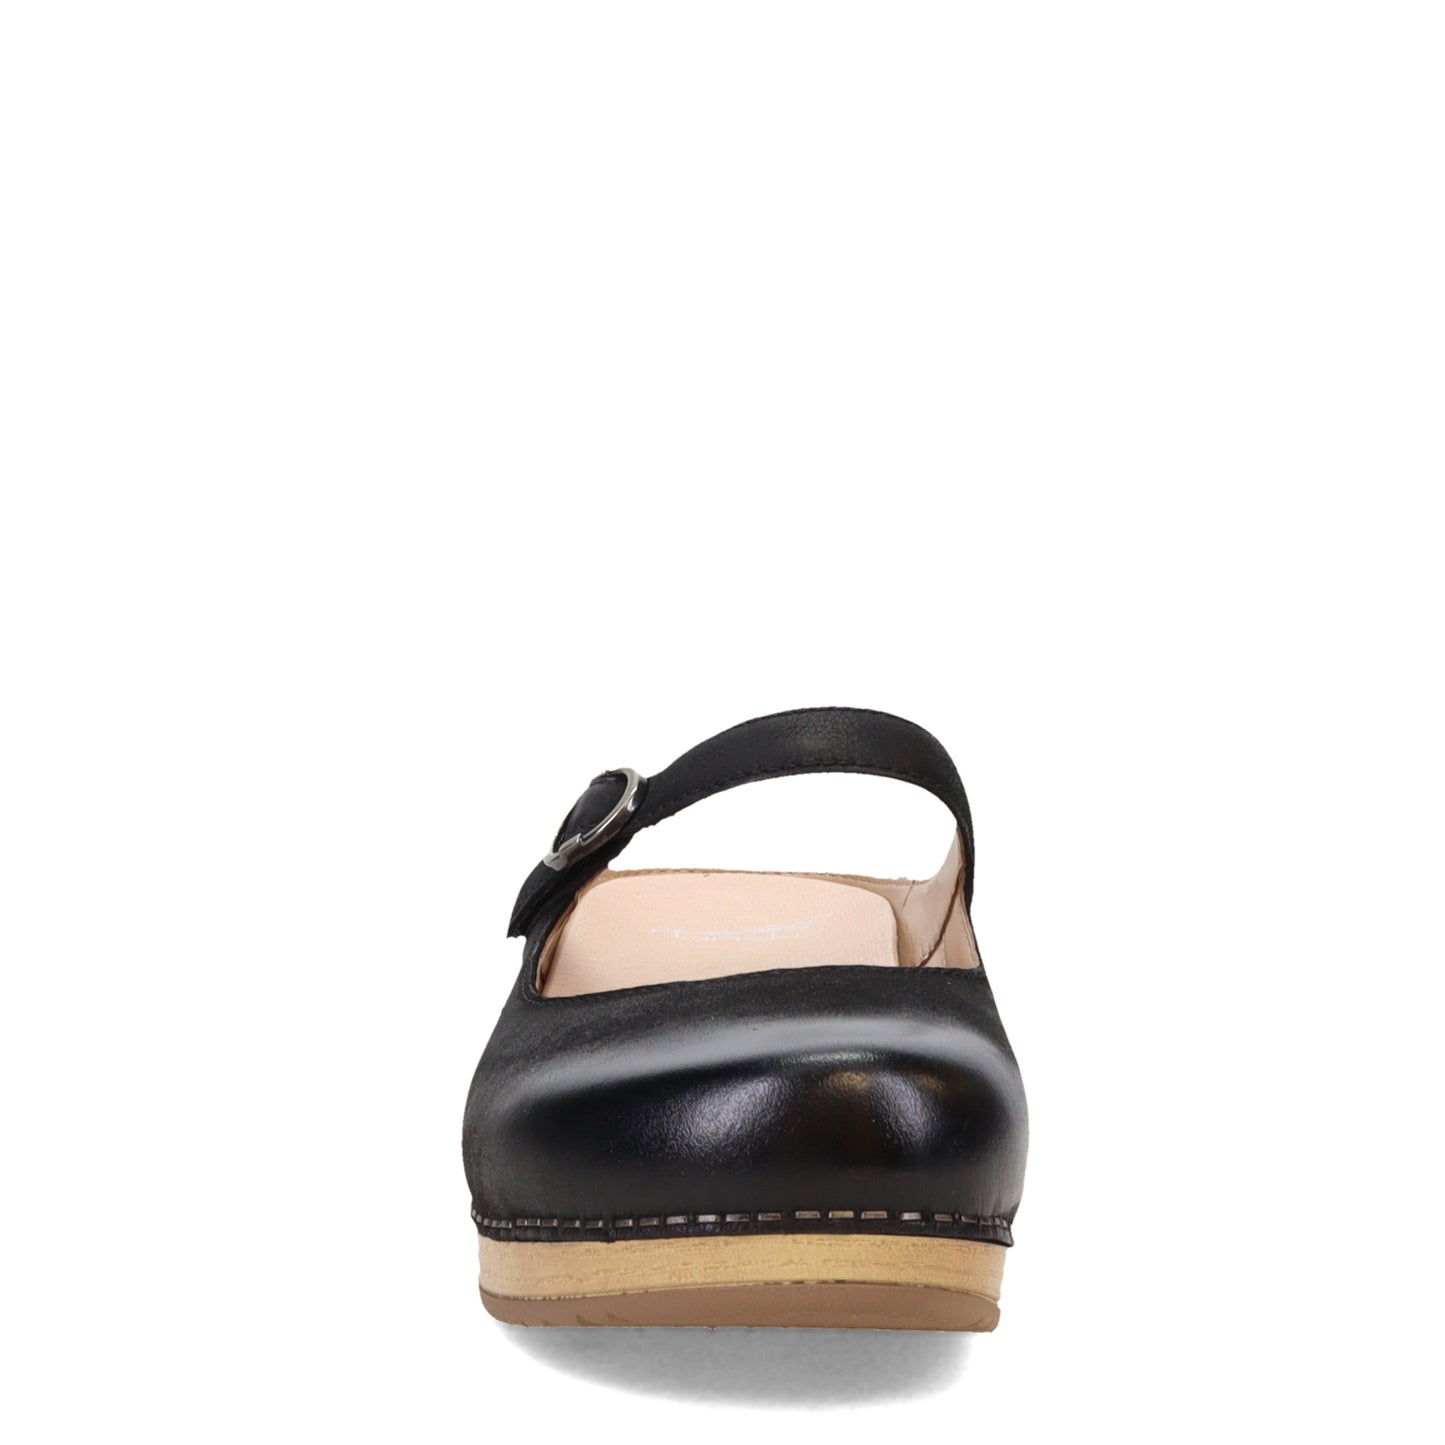 Peltz Shoes  Women's Dansko Bria Clog Black 9435-101600